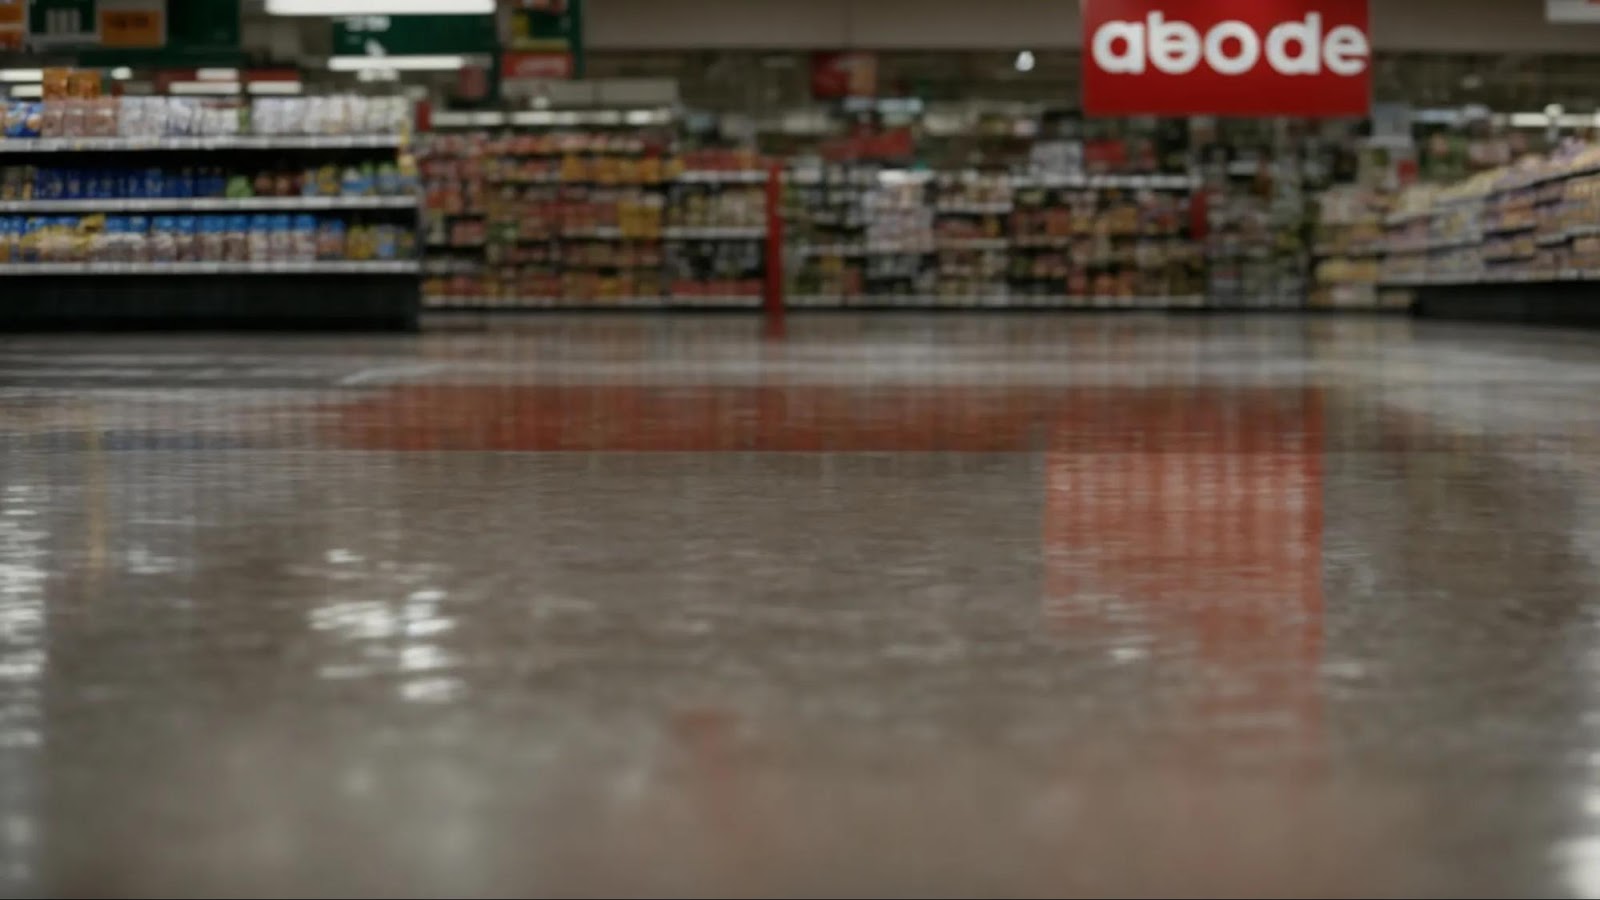 a warning sign beside a wet floor inside a supermarket aisle.